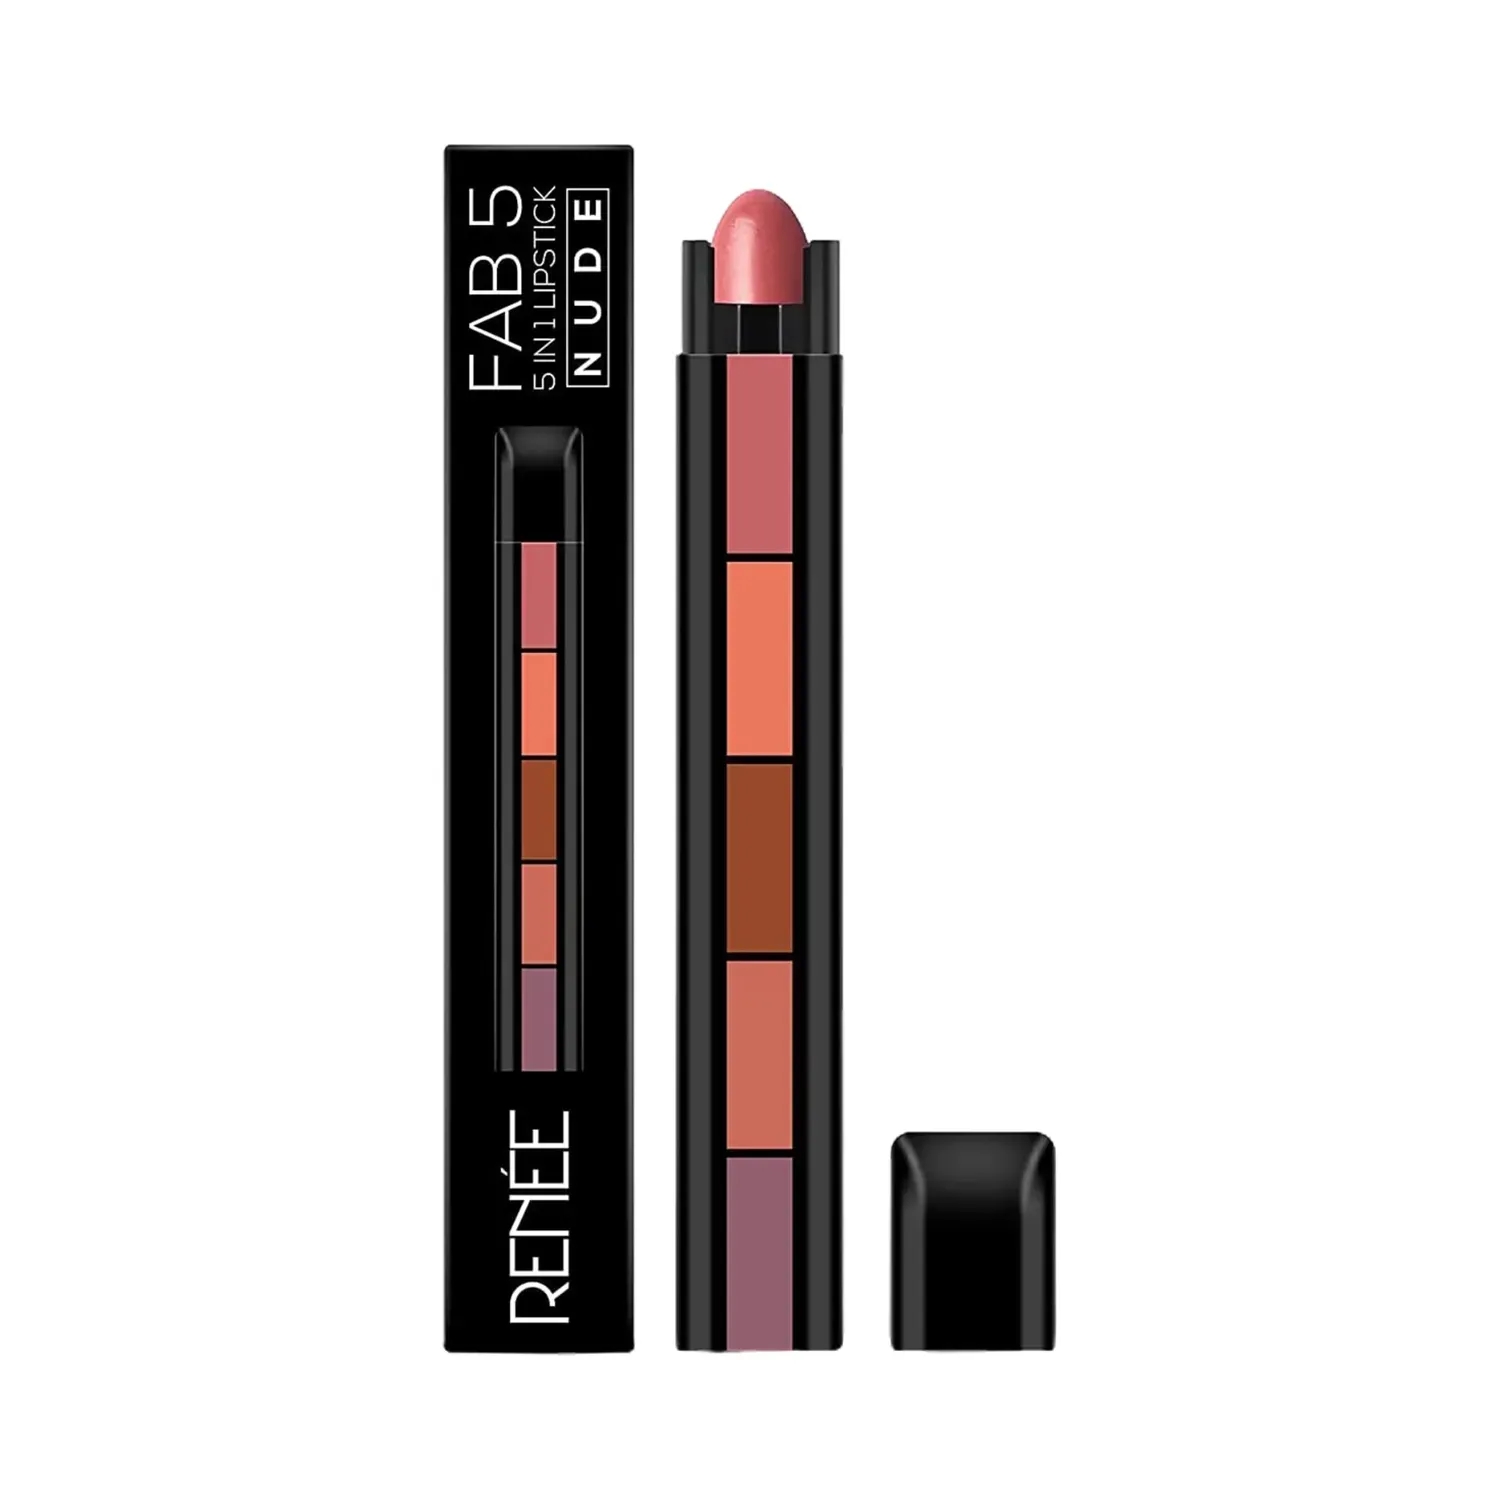 RENEE | RENEE Fab 5 5-in-1 Nude Lipstick (7.5g)